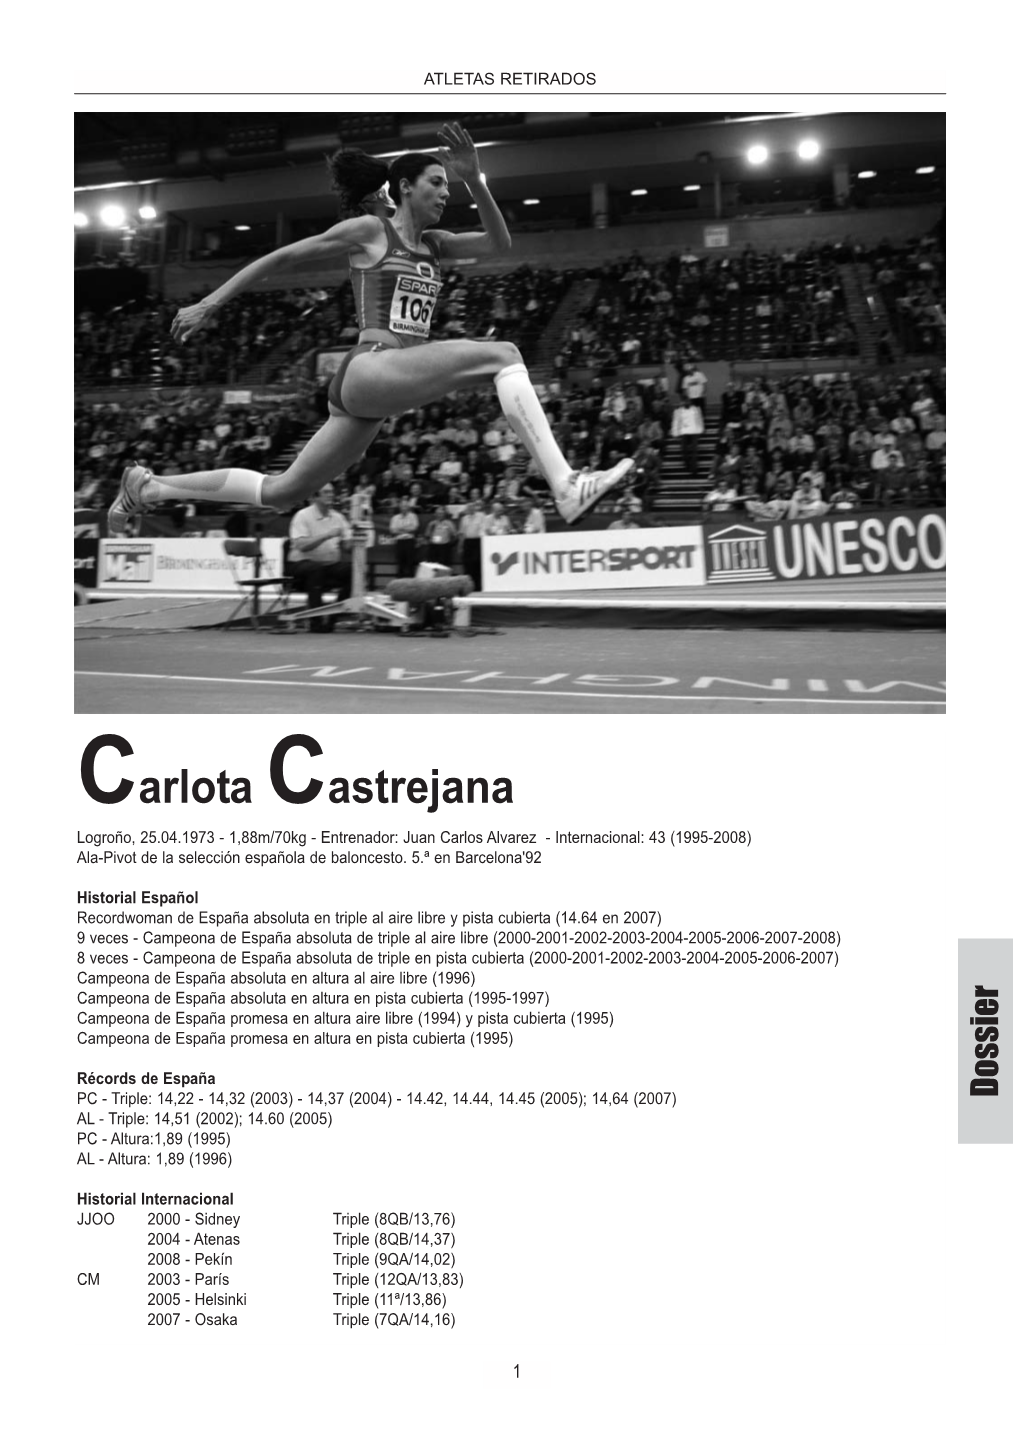 Carlota Castrejana Logroño, 25.04.1973 - 1,88M/70Kg - Entrenador: Juan Carlos Alvarez - Internacional: 43 (1995-2008) Ala-Pivot De La Selección Española De Baloncesto